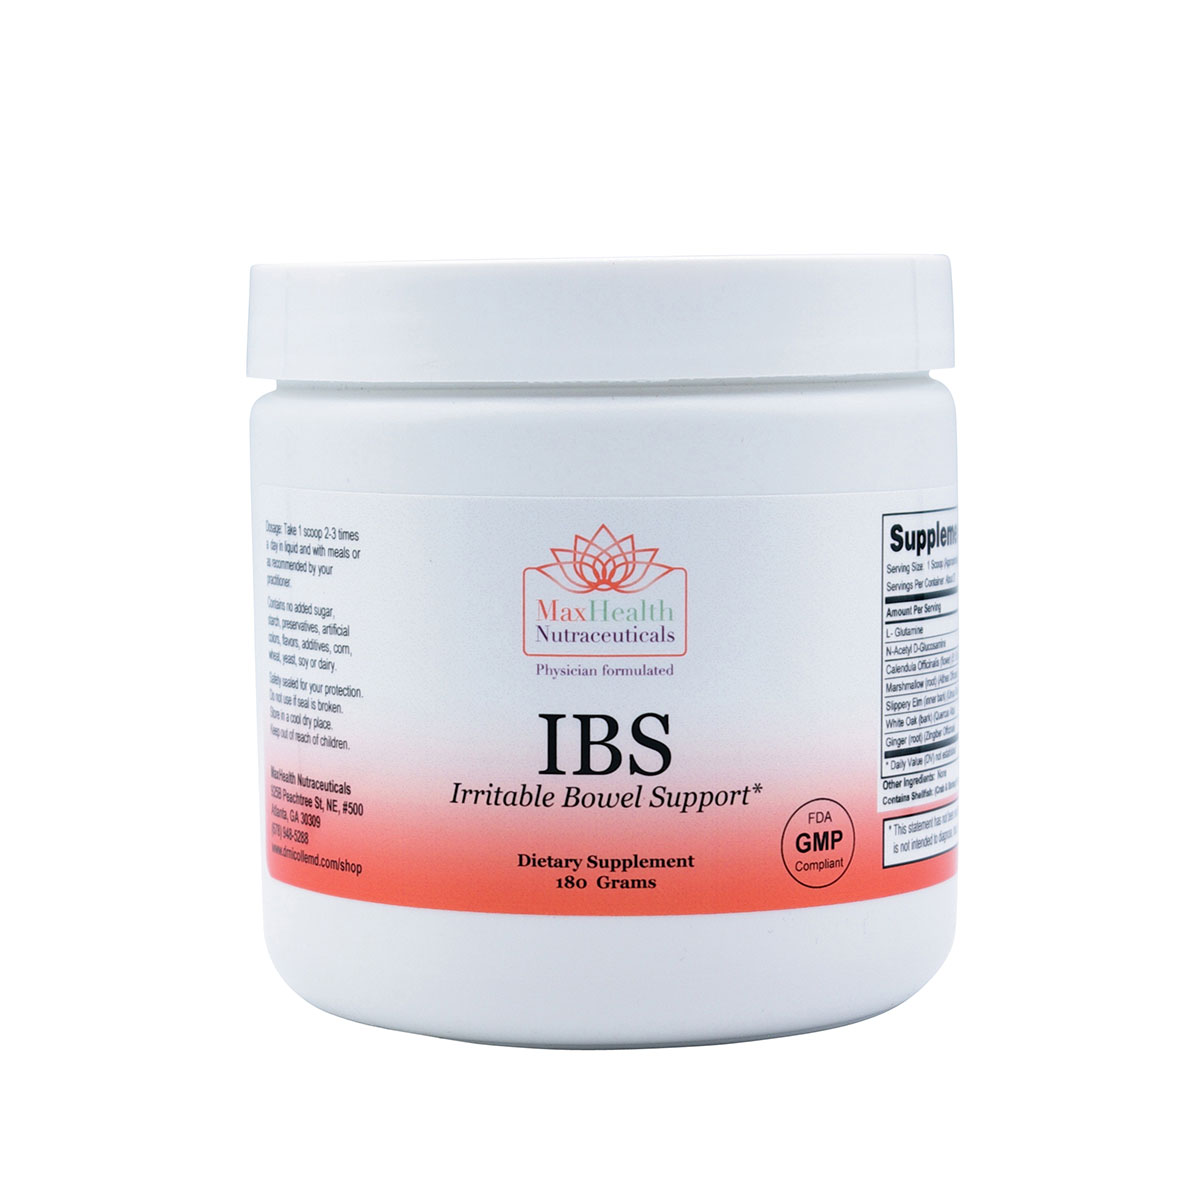 11IBS Irritable Bowel Support Powder